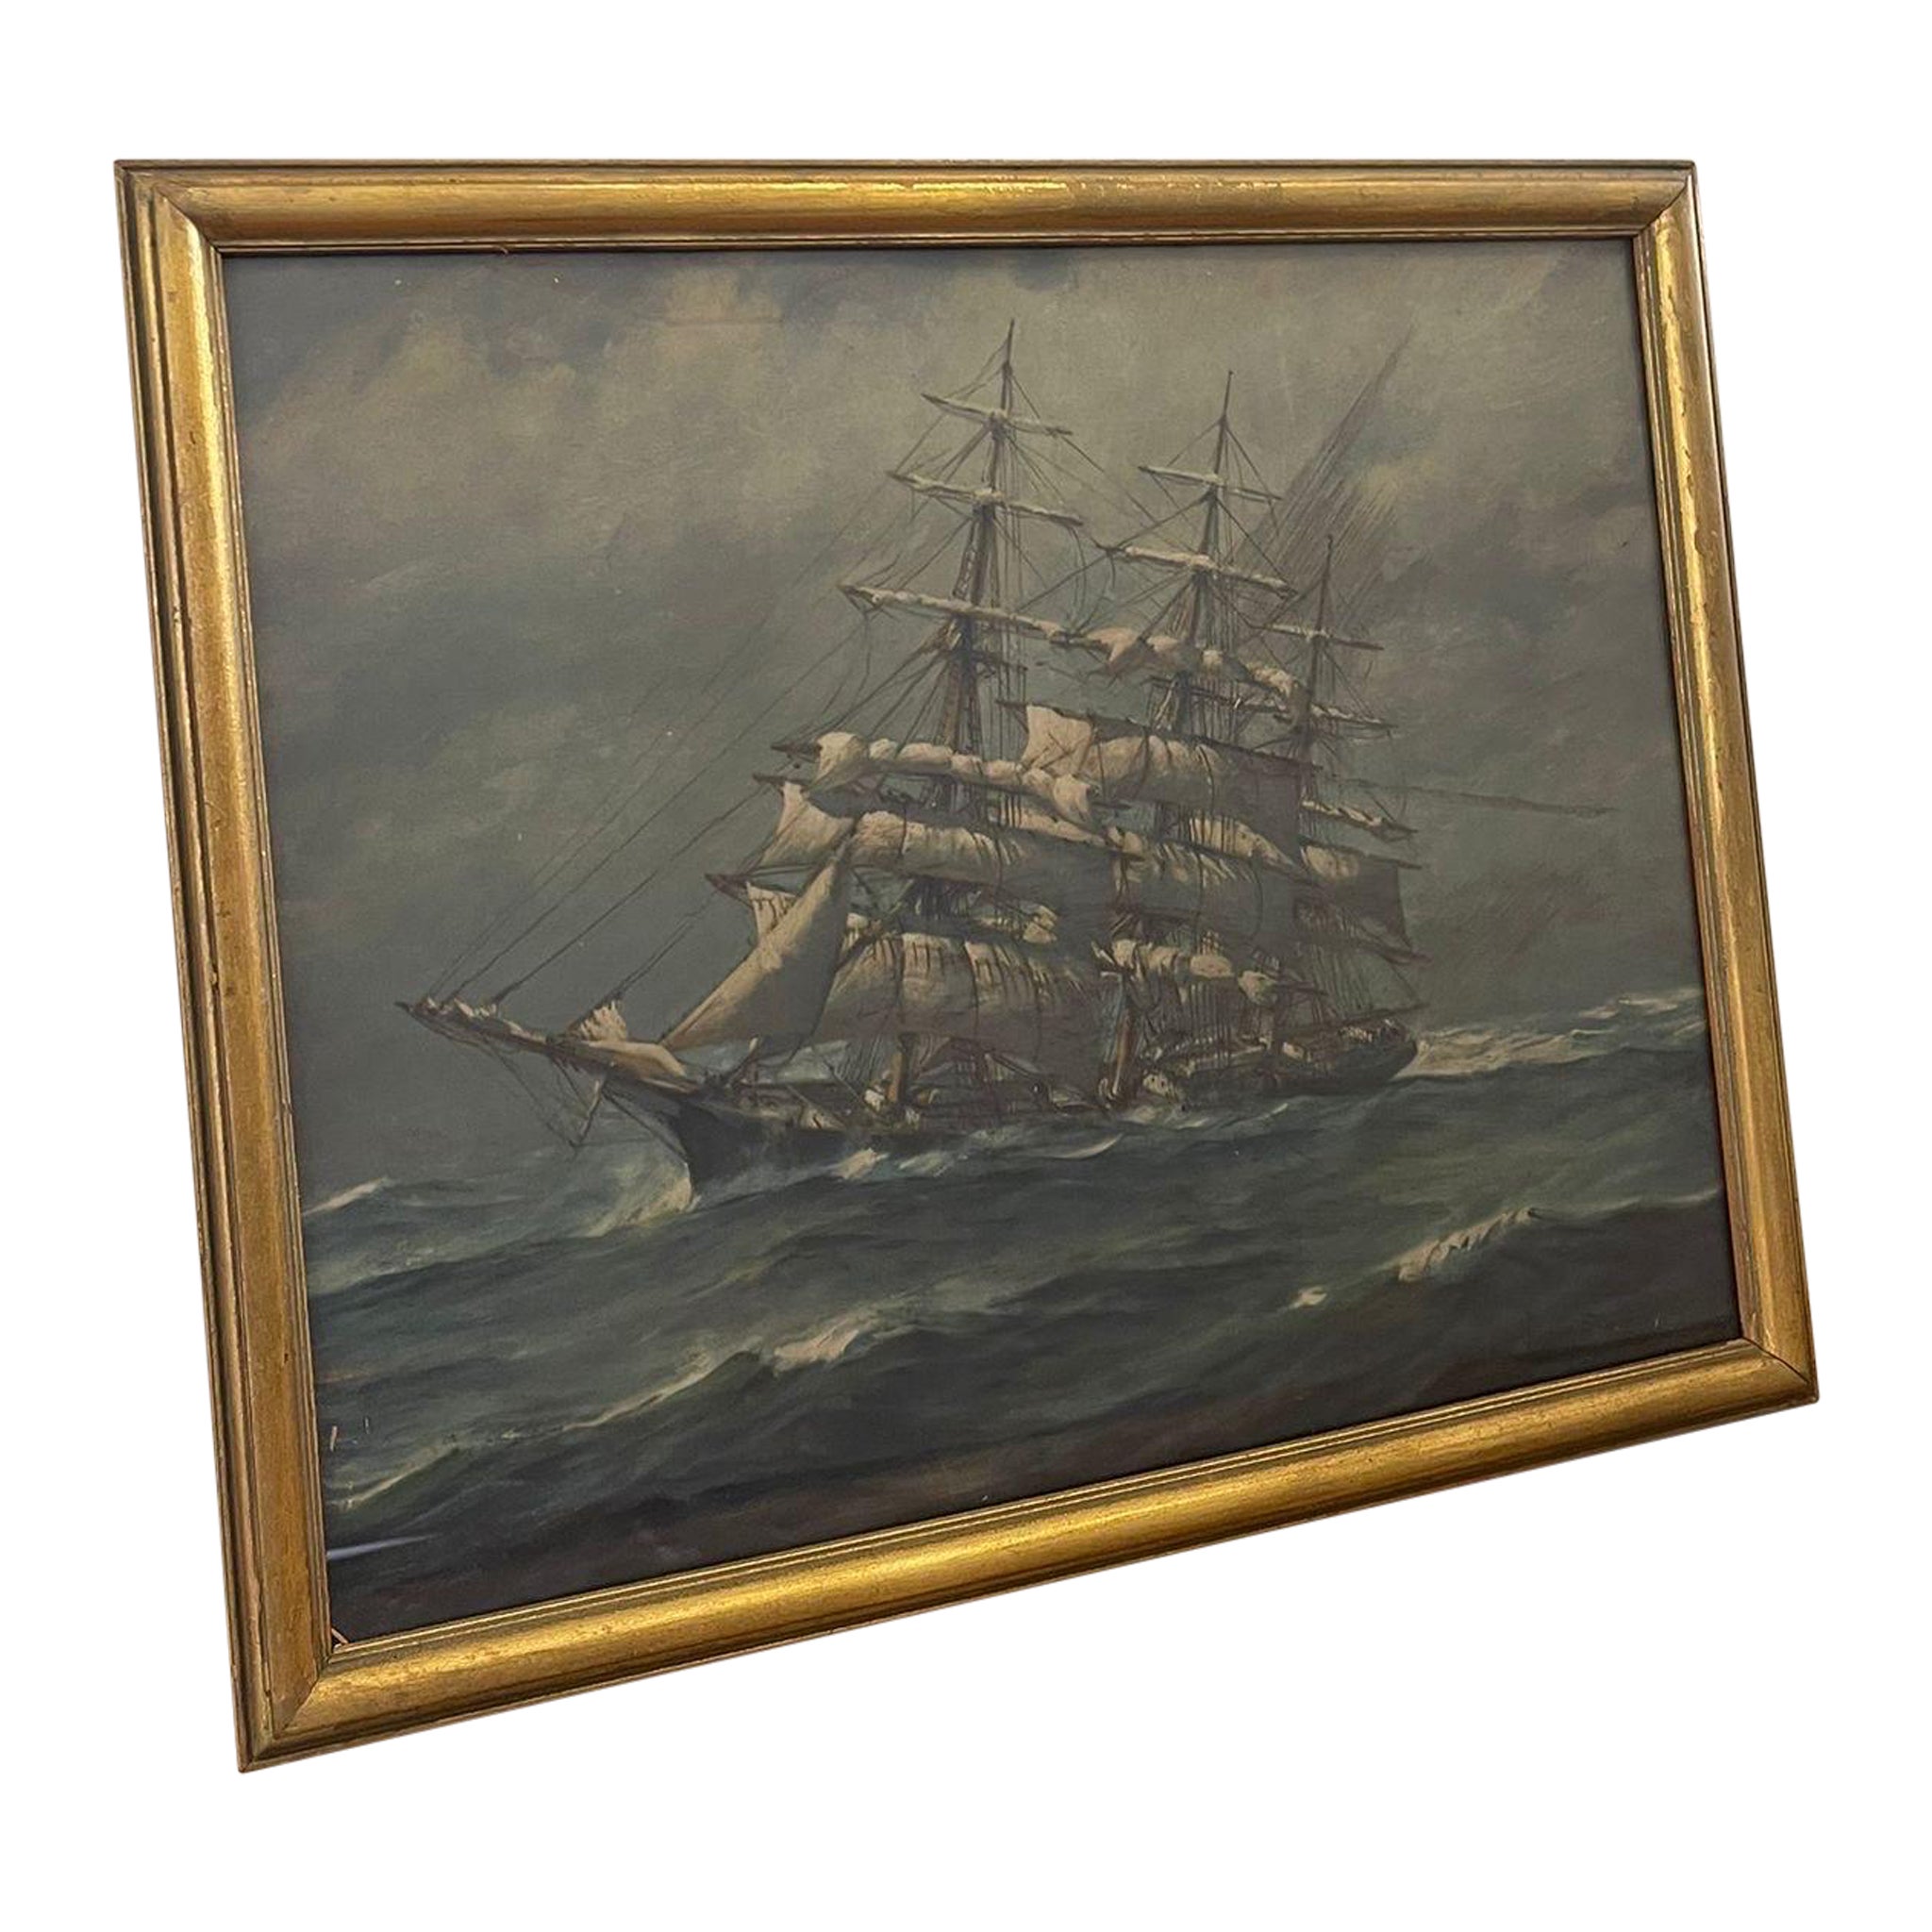 Vintage Framed and Signed Print of Sail Boat at Sea.